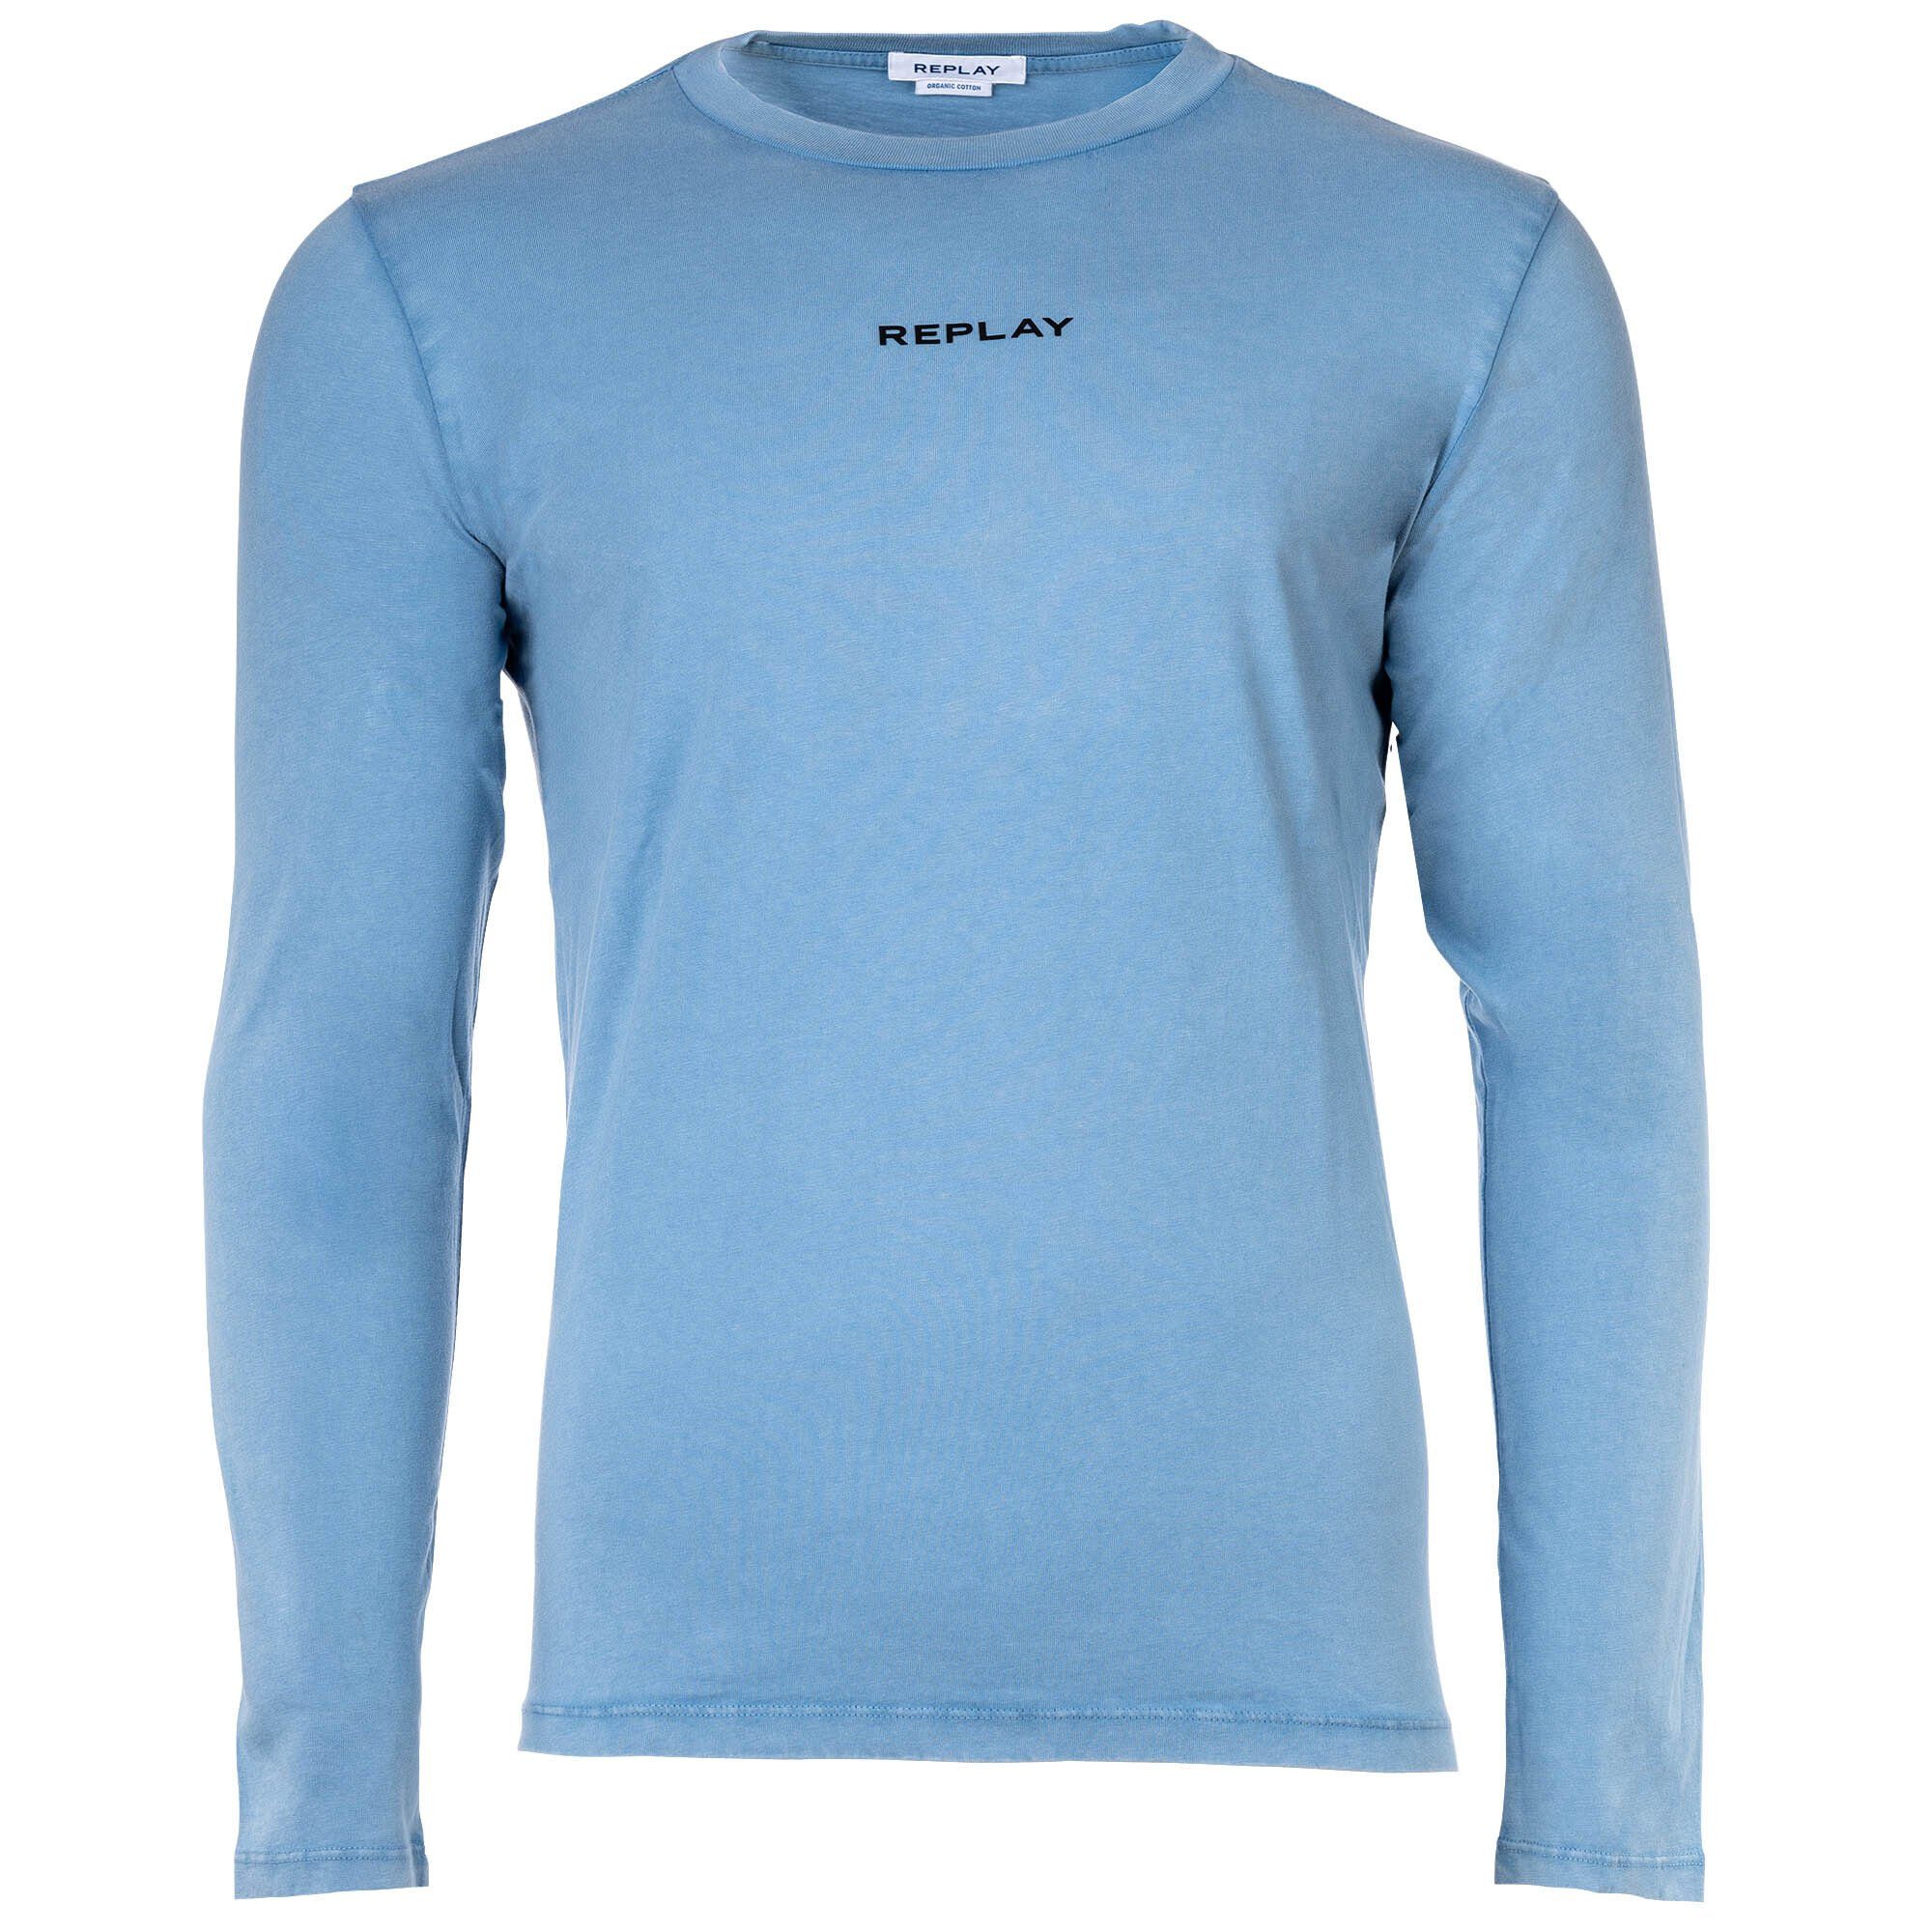 Replay T-Shirt Herren Longsleeve, Rundhals, Baumwolle, Jersey Blau